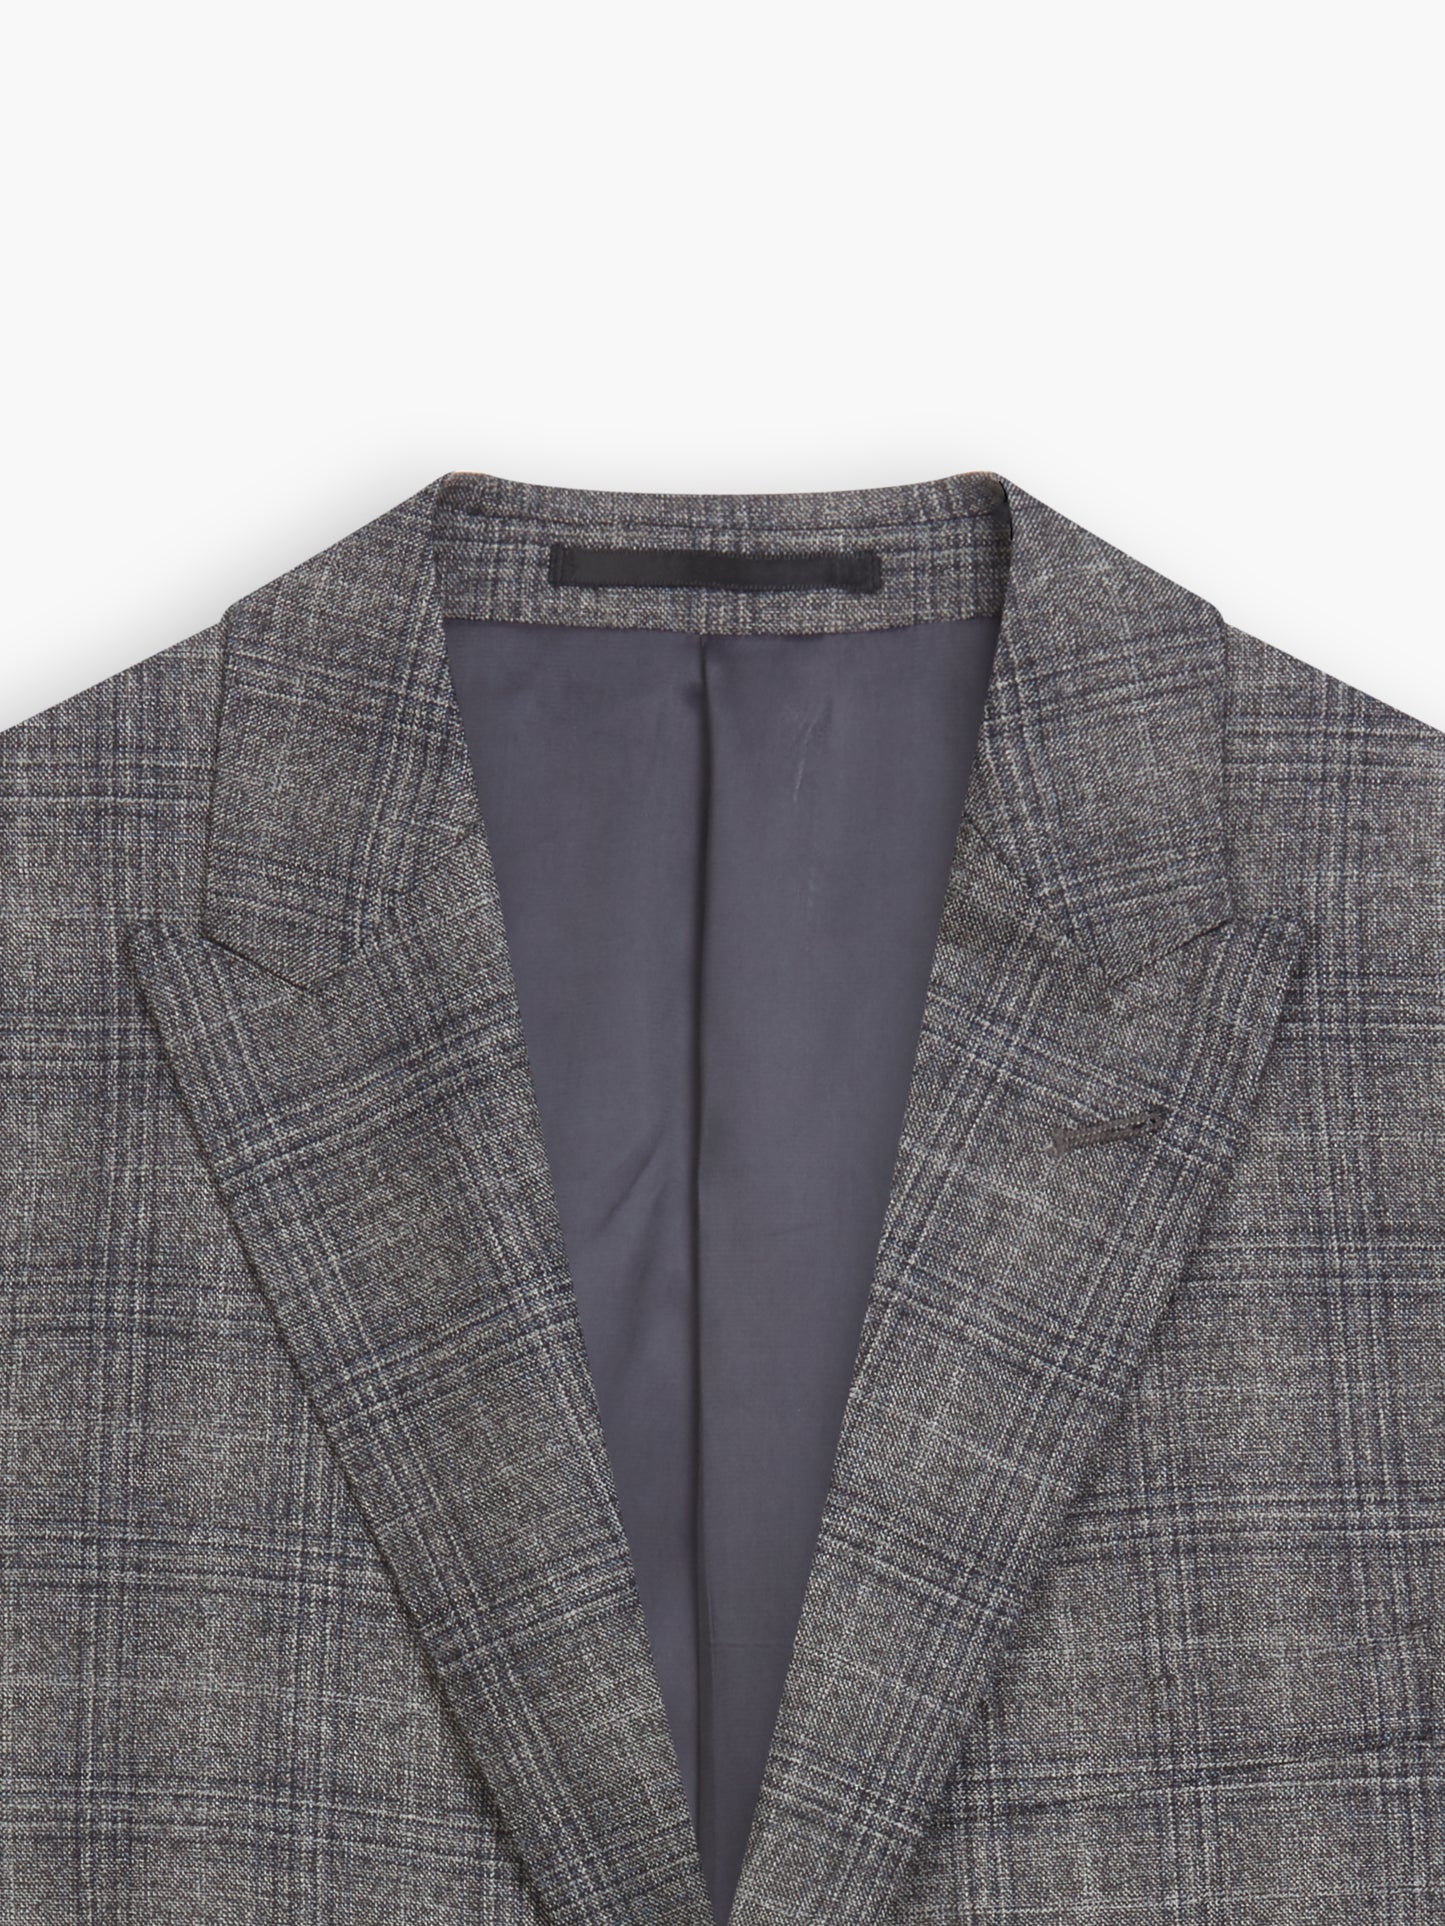 Crossley Infinity Slim Fit Grey Check Jacket